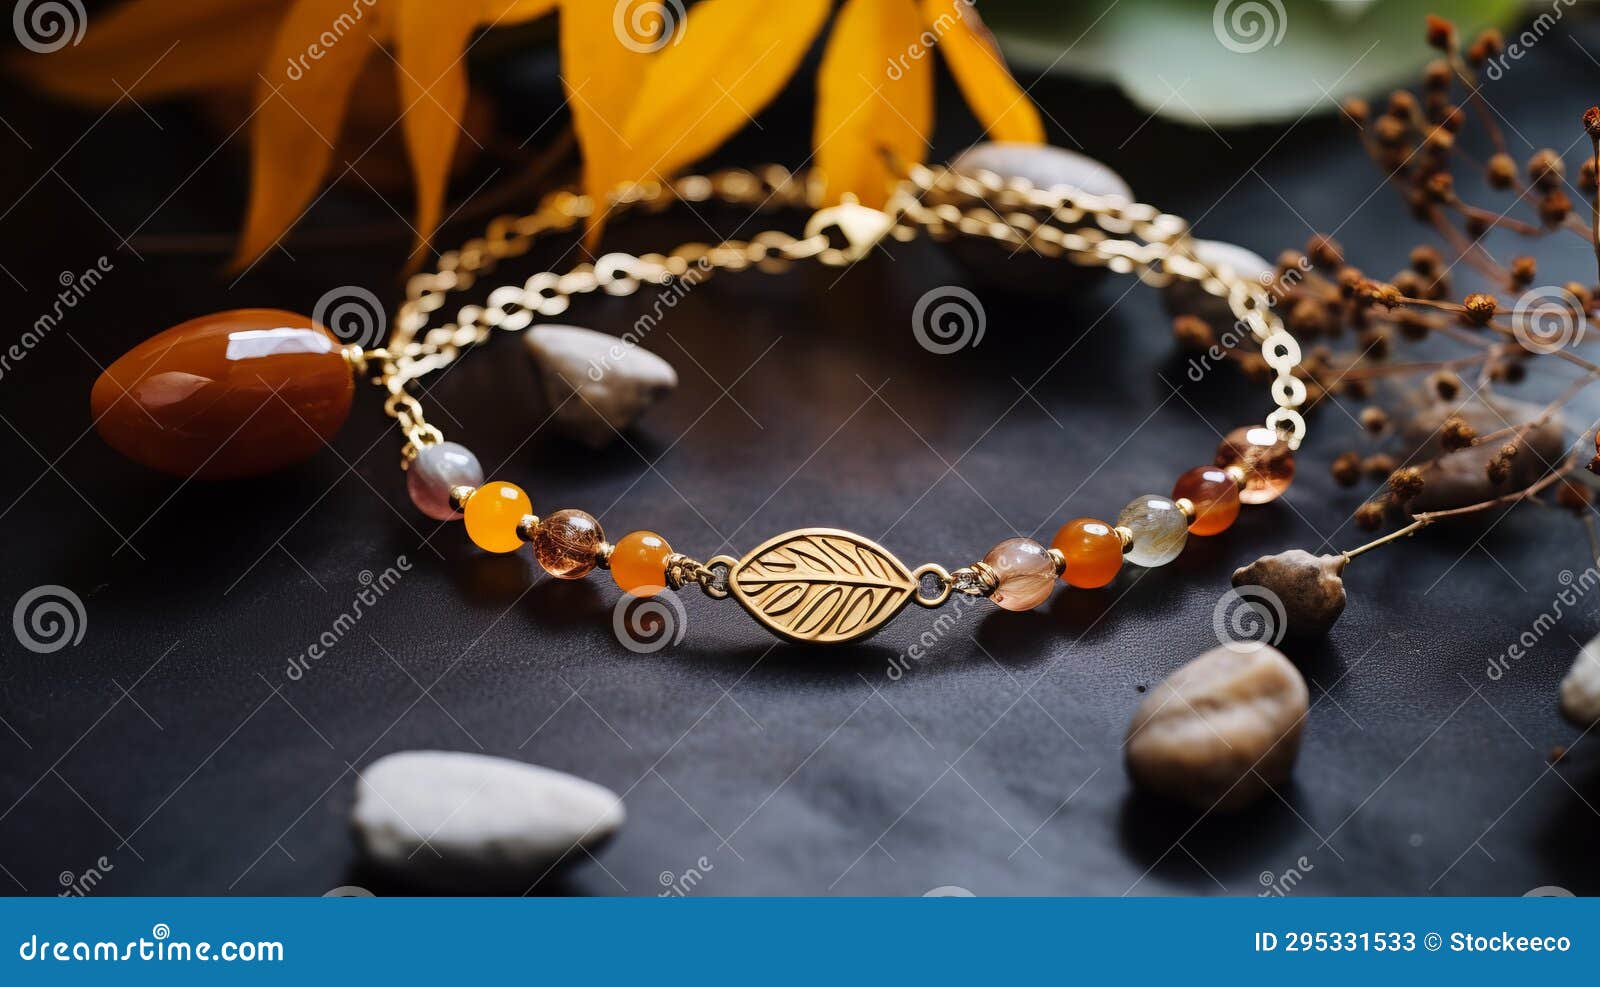 Handmade autumn leaf bracelet - DIY jewellery project